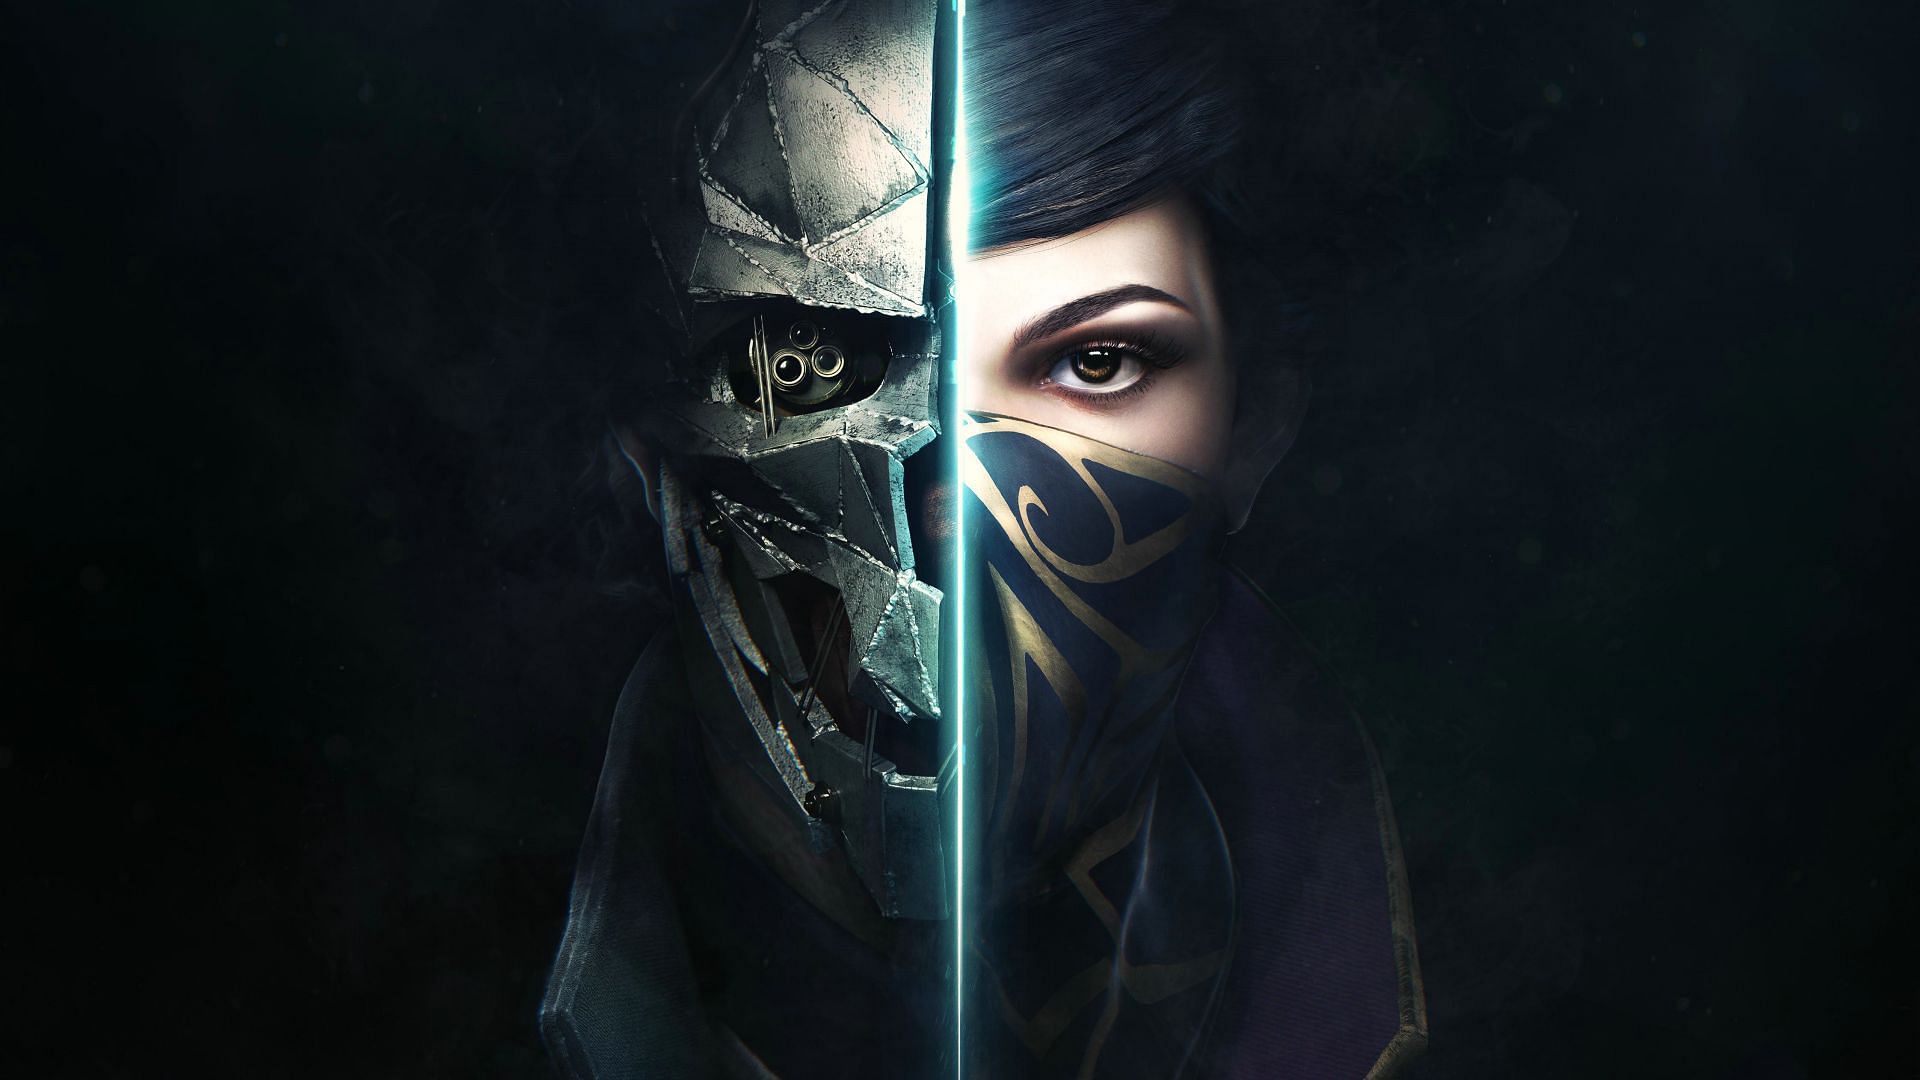 Cover art for Dishonored 2 (Image via Arkane)